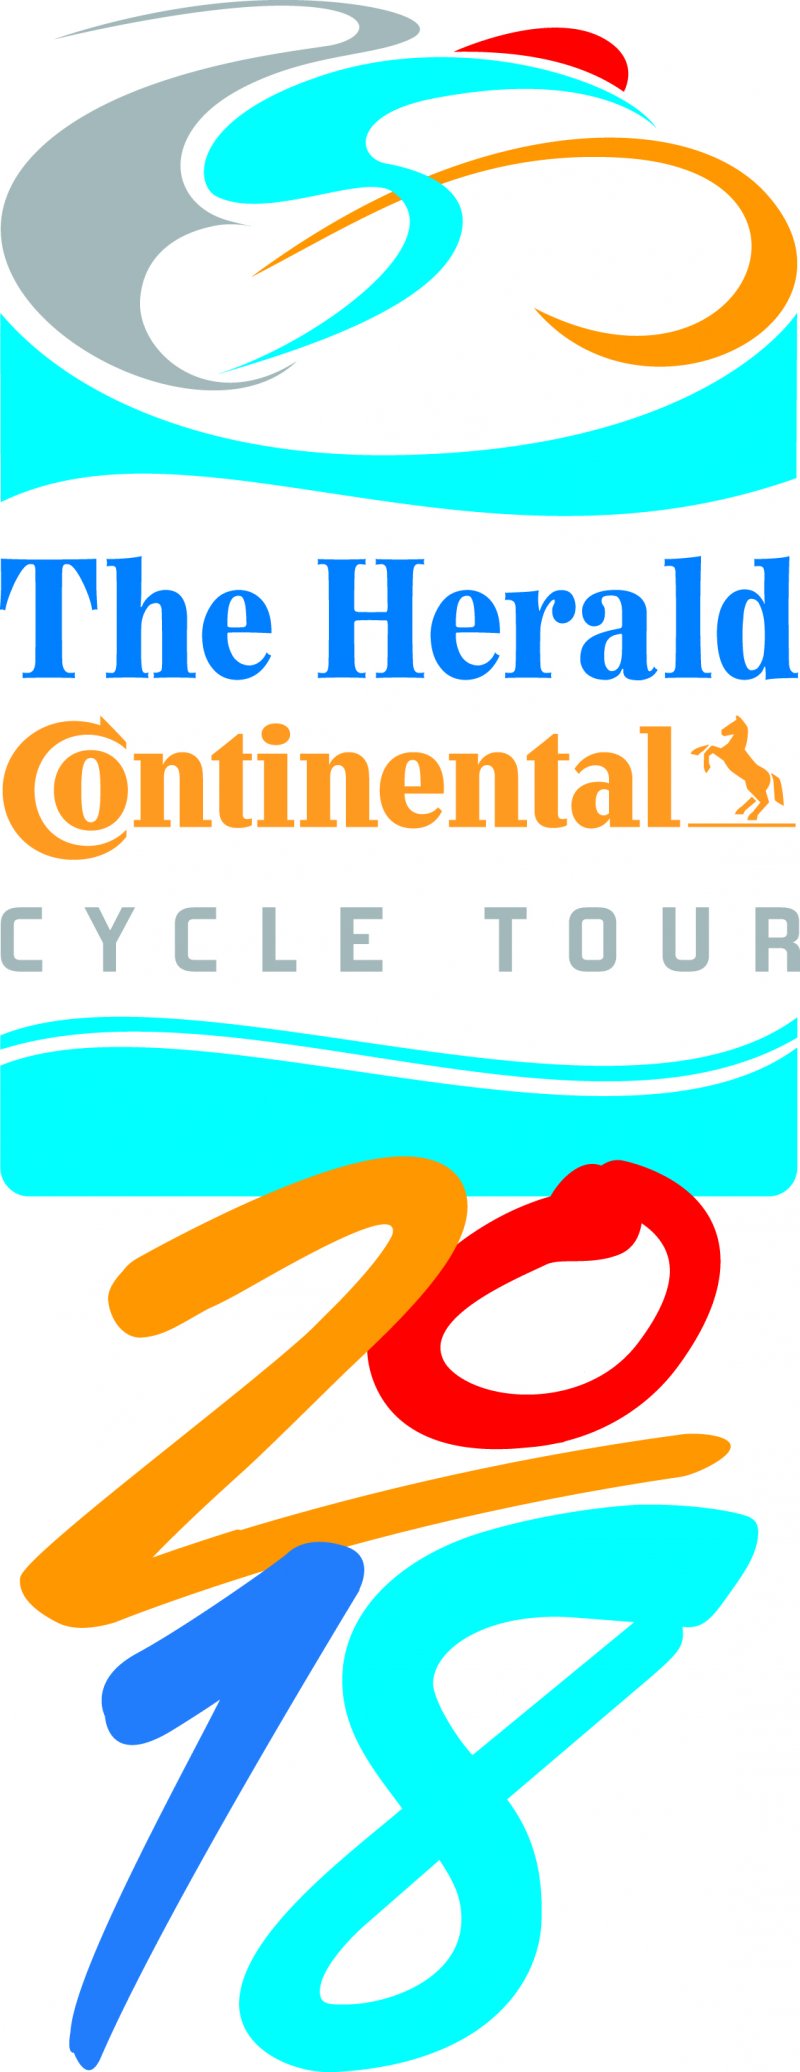 herald cycle tour